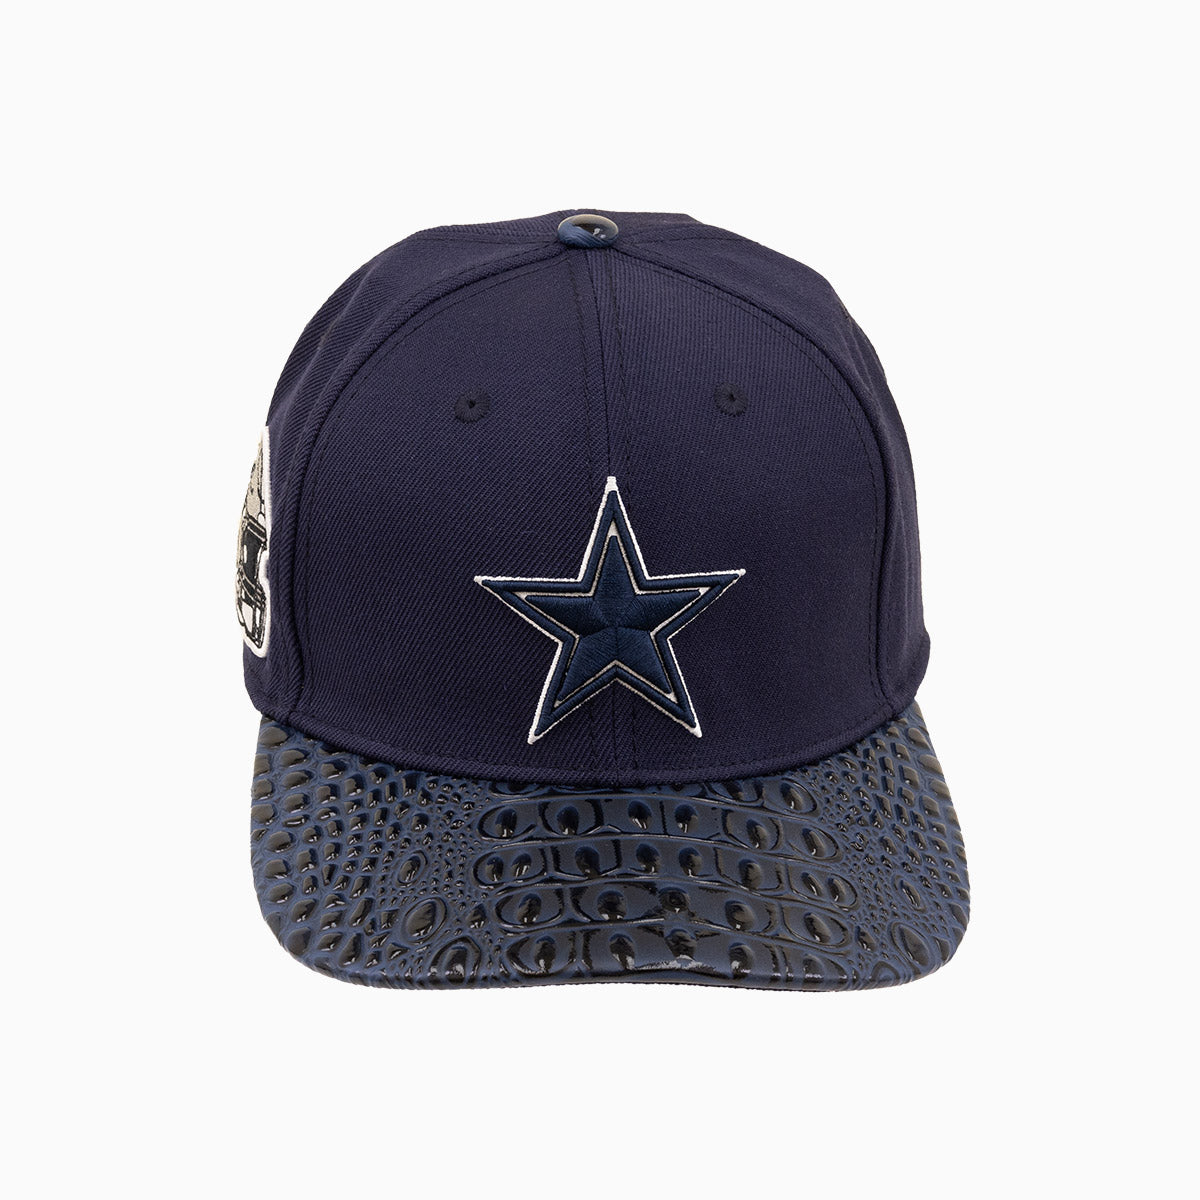 Dallas Cowboys NFL Leather Visor Flatbrim Snapback Hat